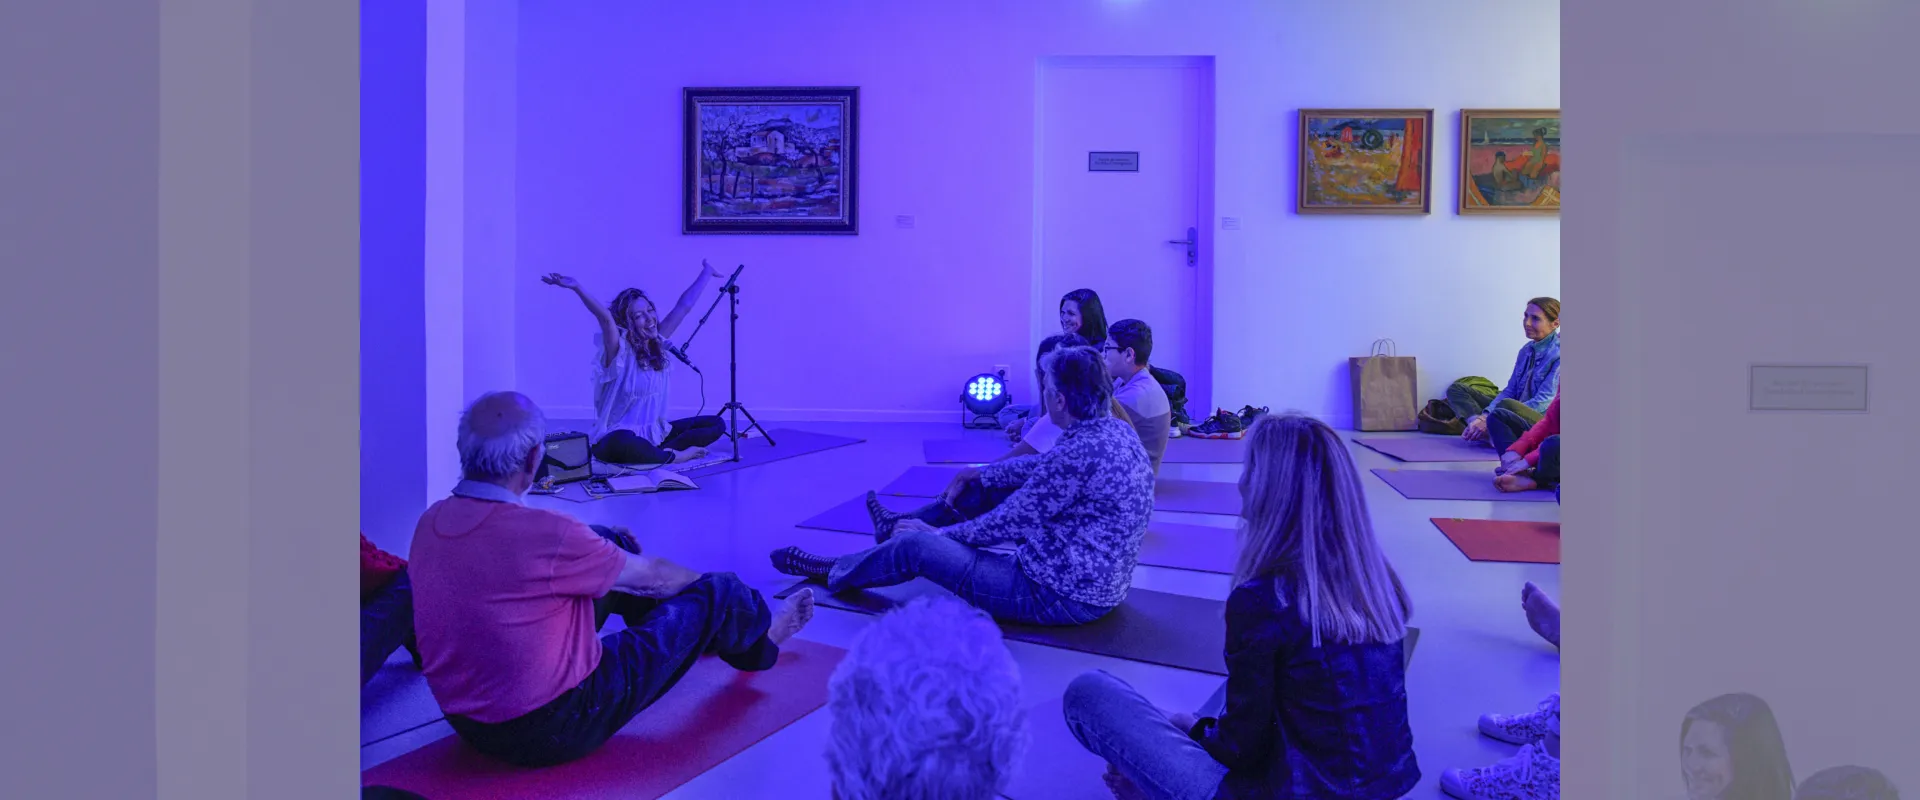 Séance de méditation au musée d'art Hyacinthe Rigaud avec Sabrina Bessoles